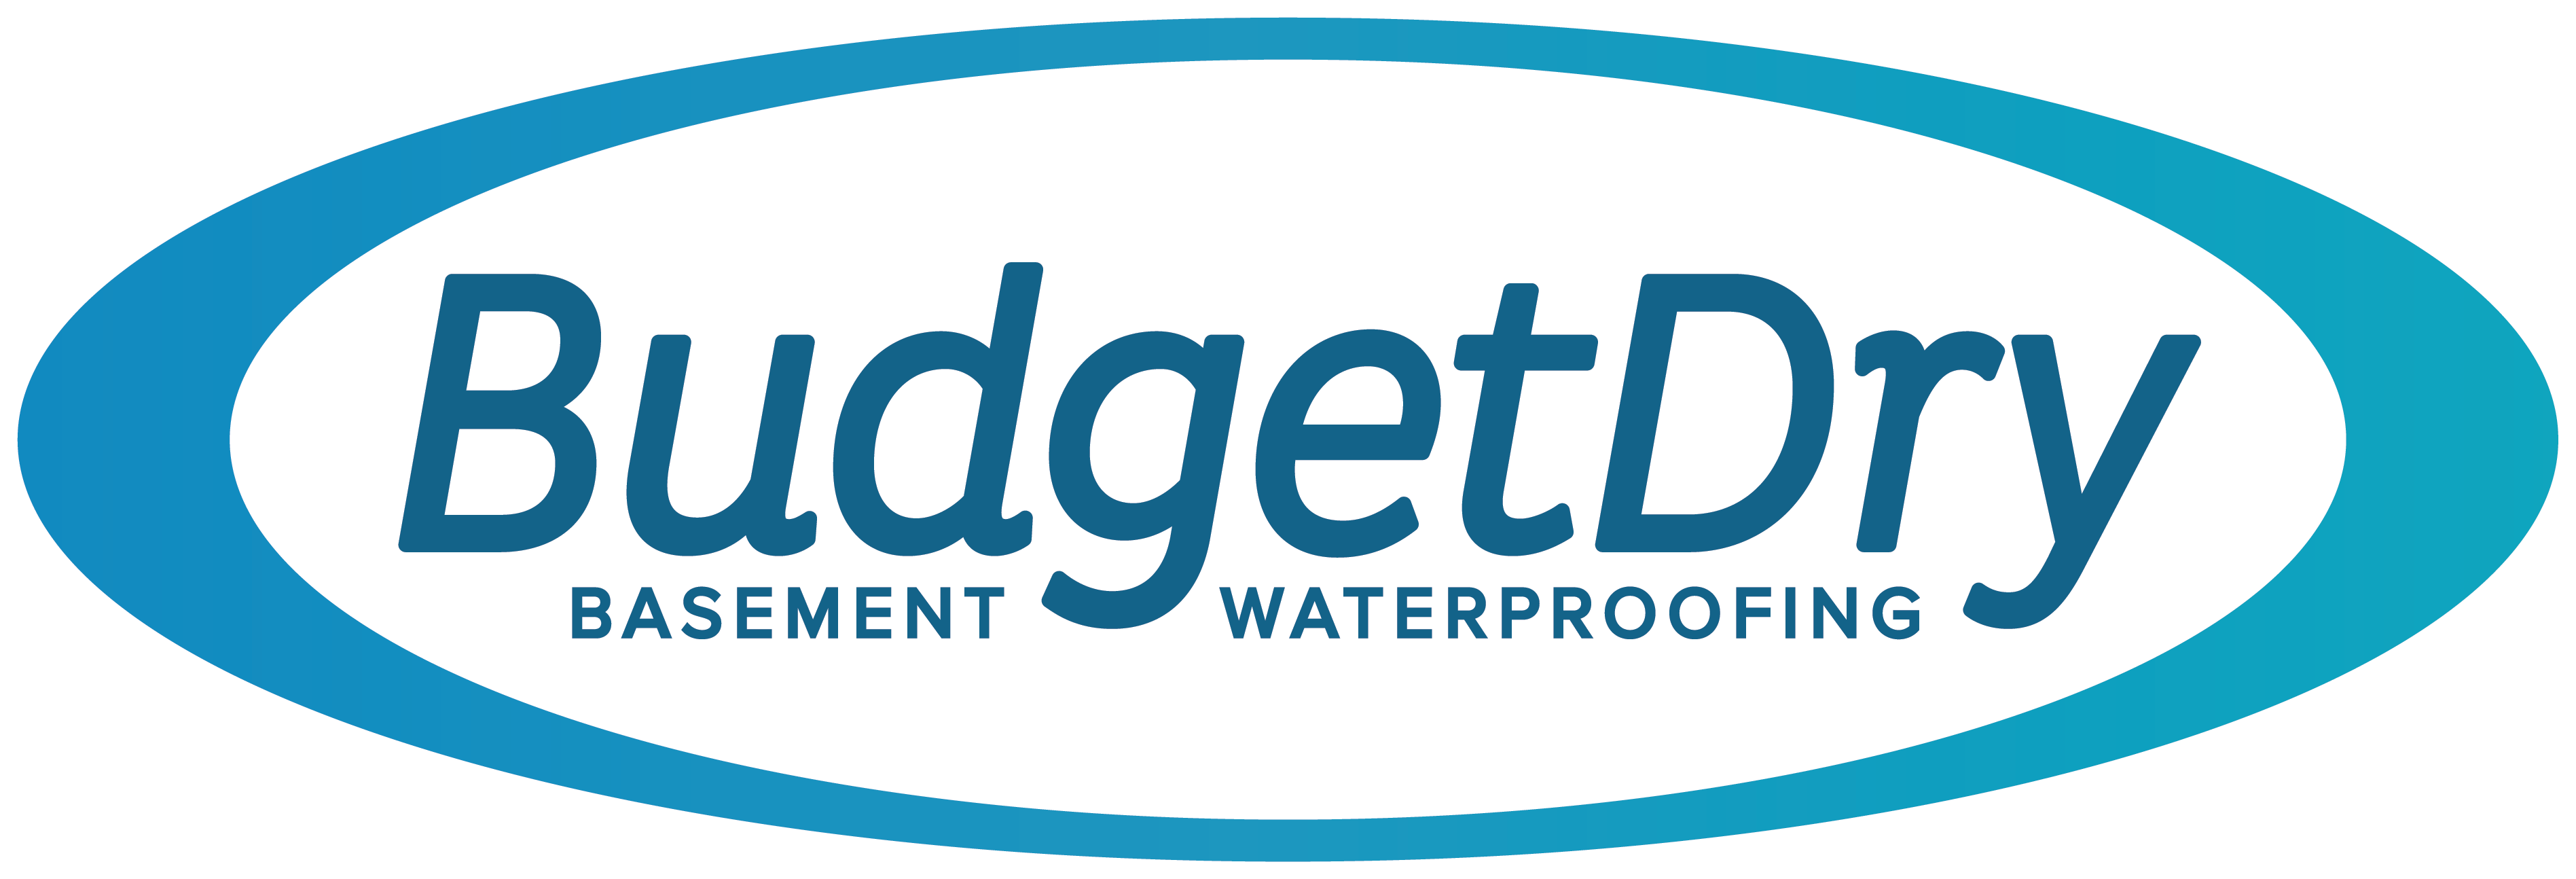 Budget Dry Waterproofing, Inc. Logo